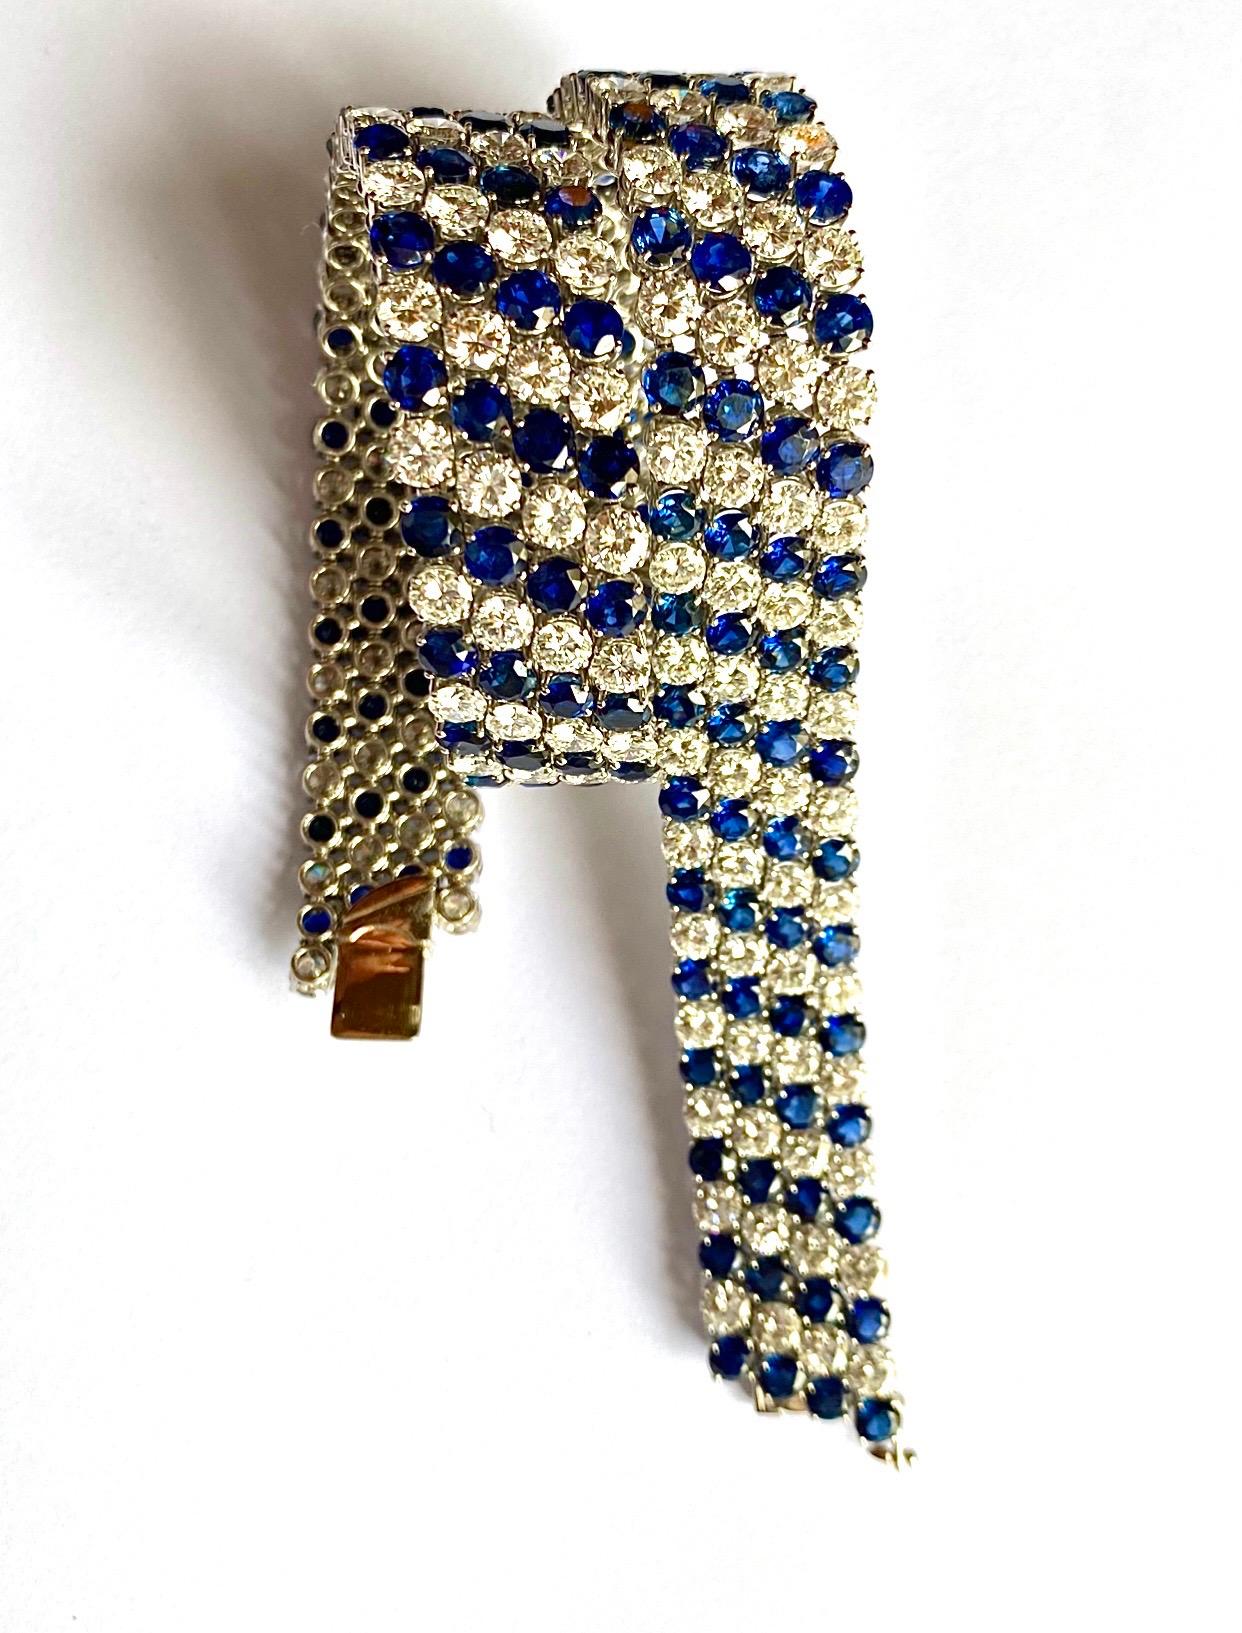 Modern Van Cleef & Arpels Pair of Sapphire and Diamond Bracelet Necklace Combination